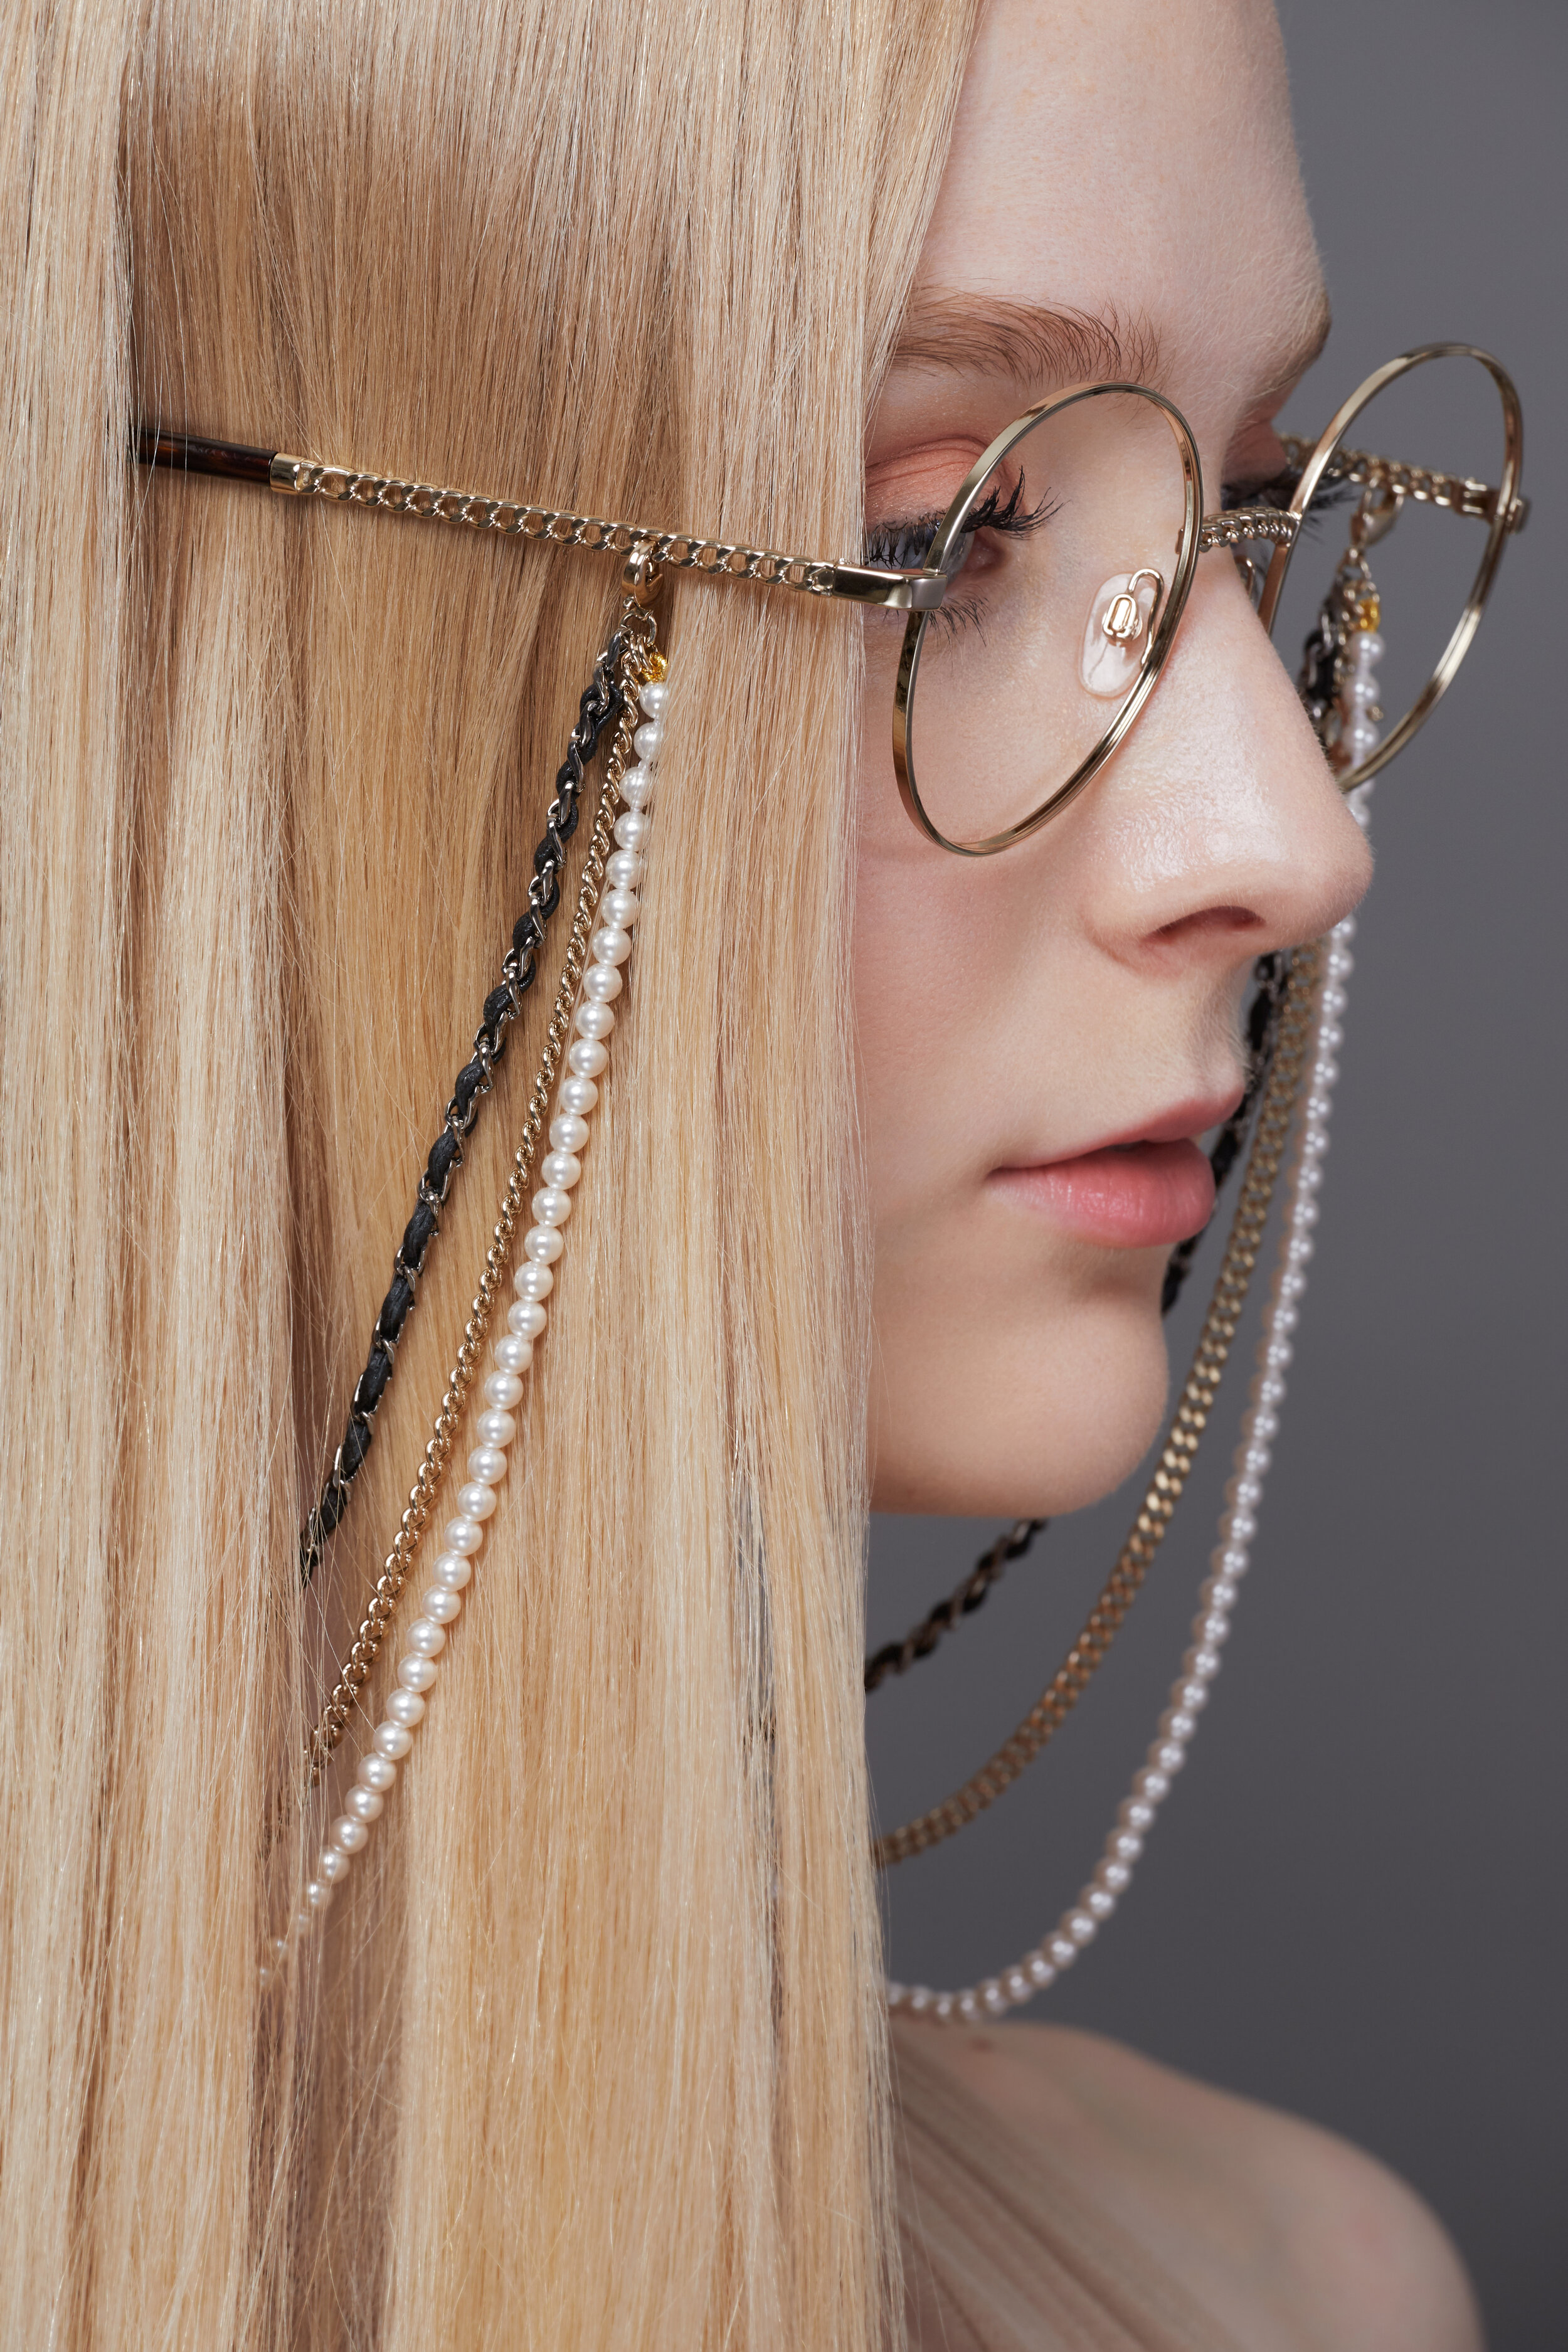 Chanel Chain Glasses 